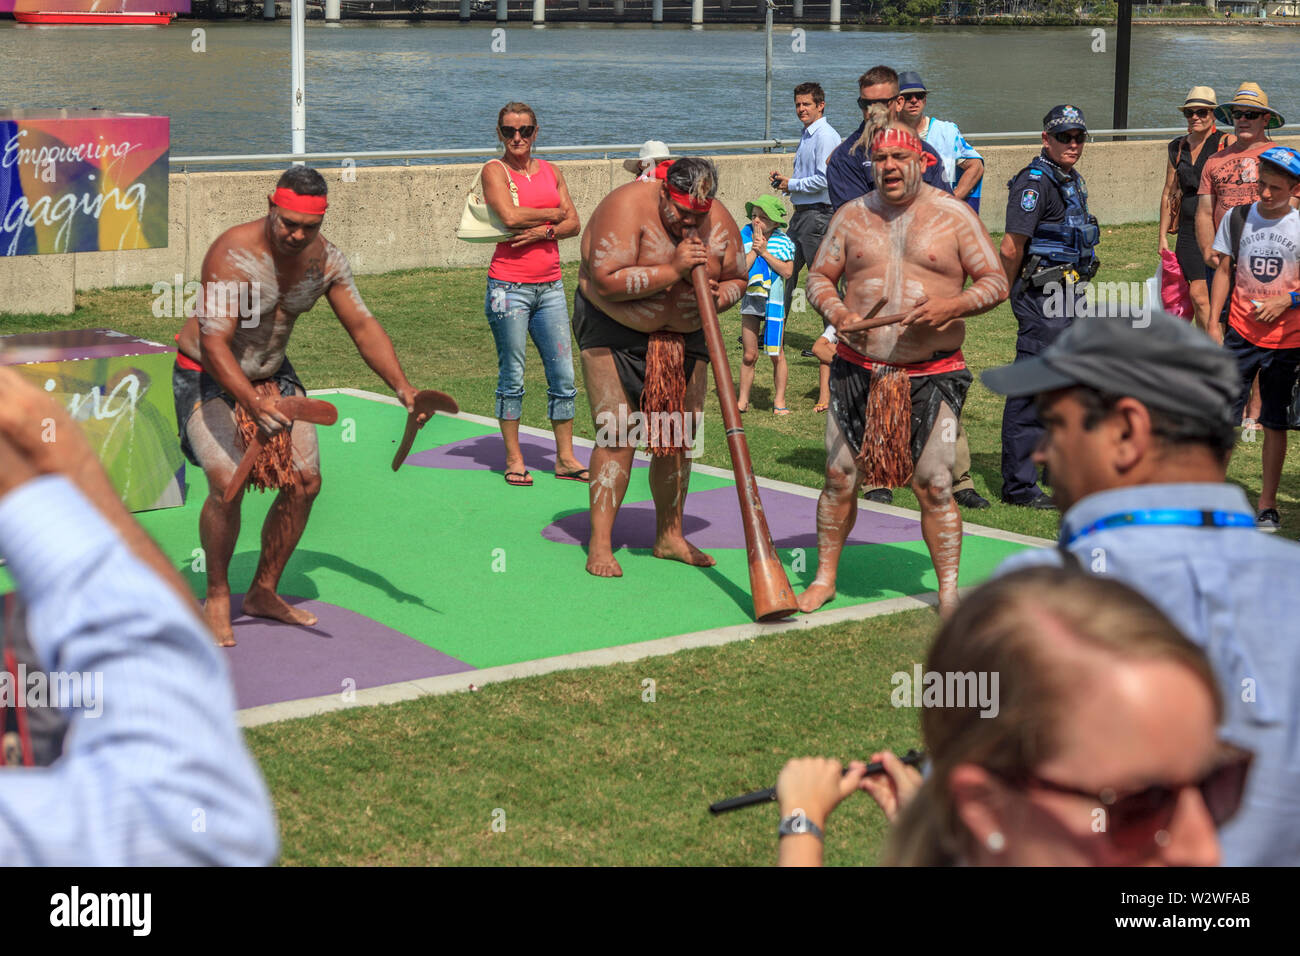 Aboriginal Australians welcoming party Stock Photo